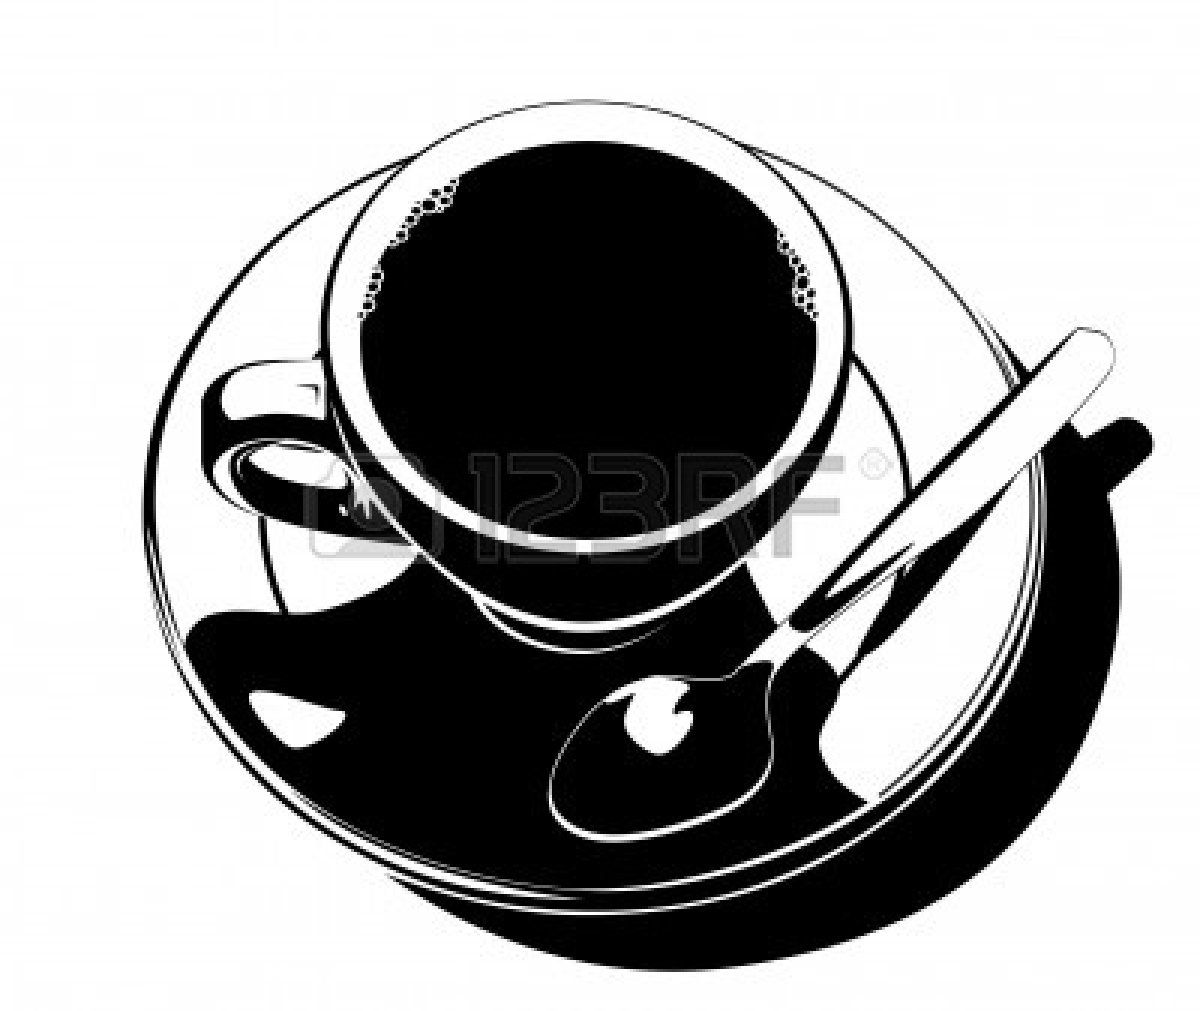 Unique coffee cup logo clipart